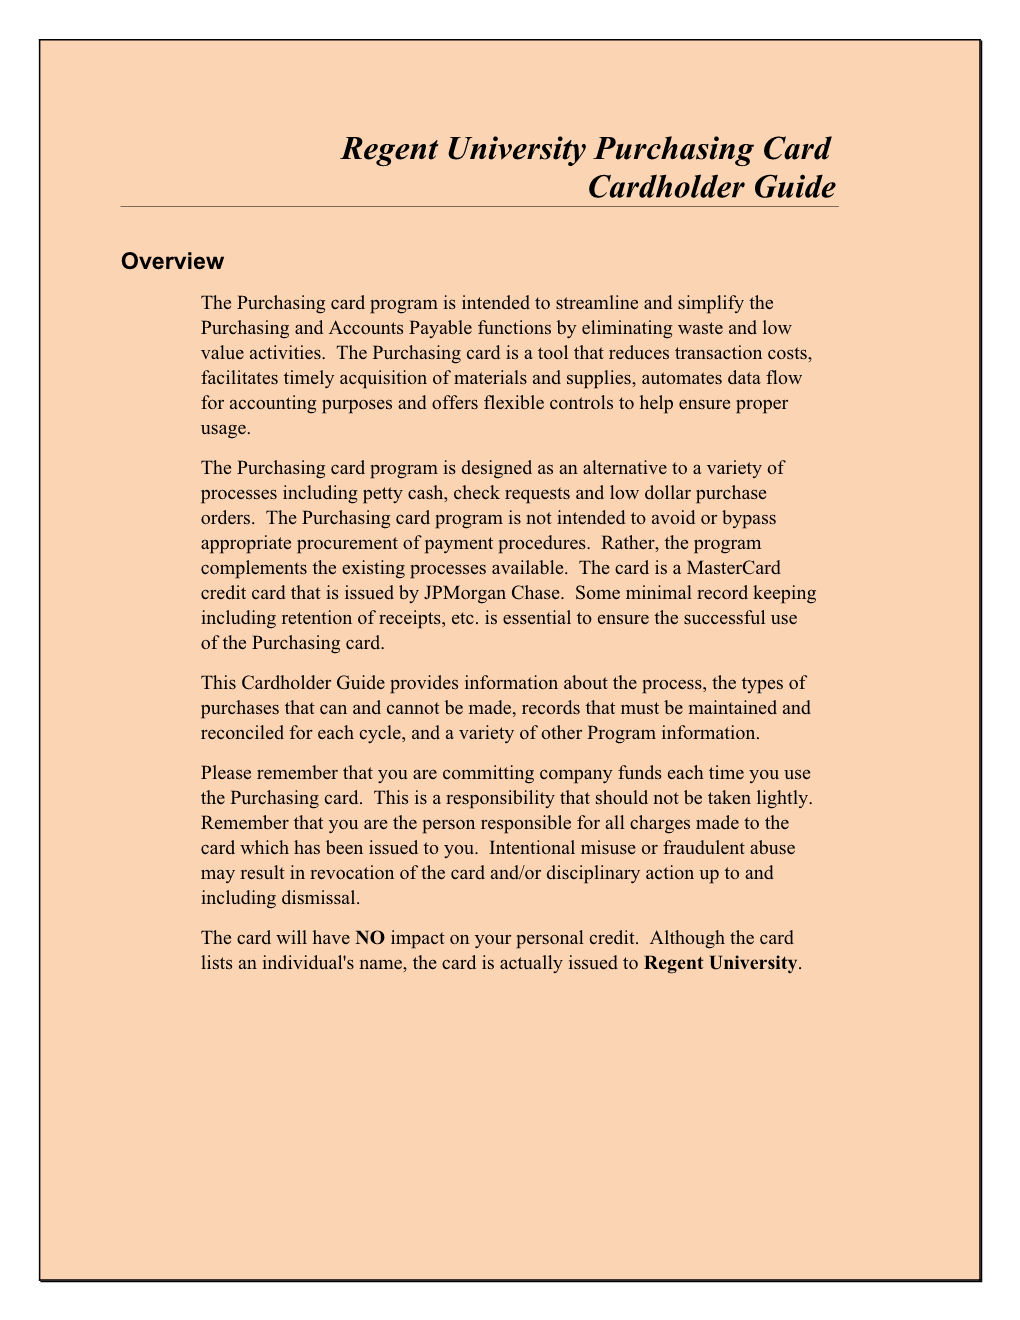 Sample Purchasing Card Cardholder Guide